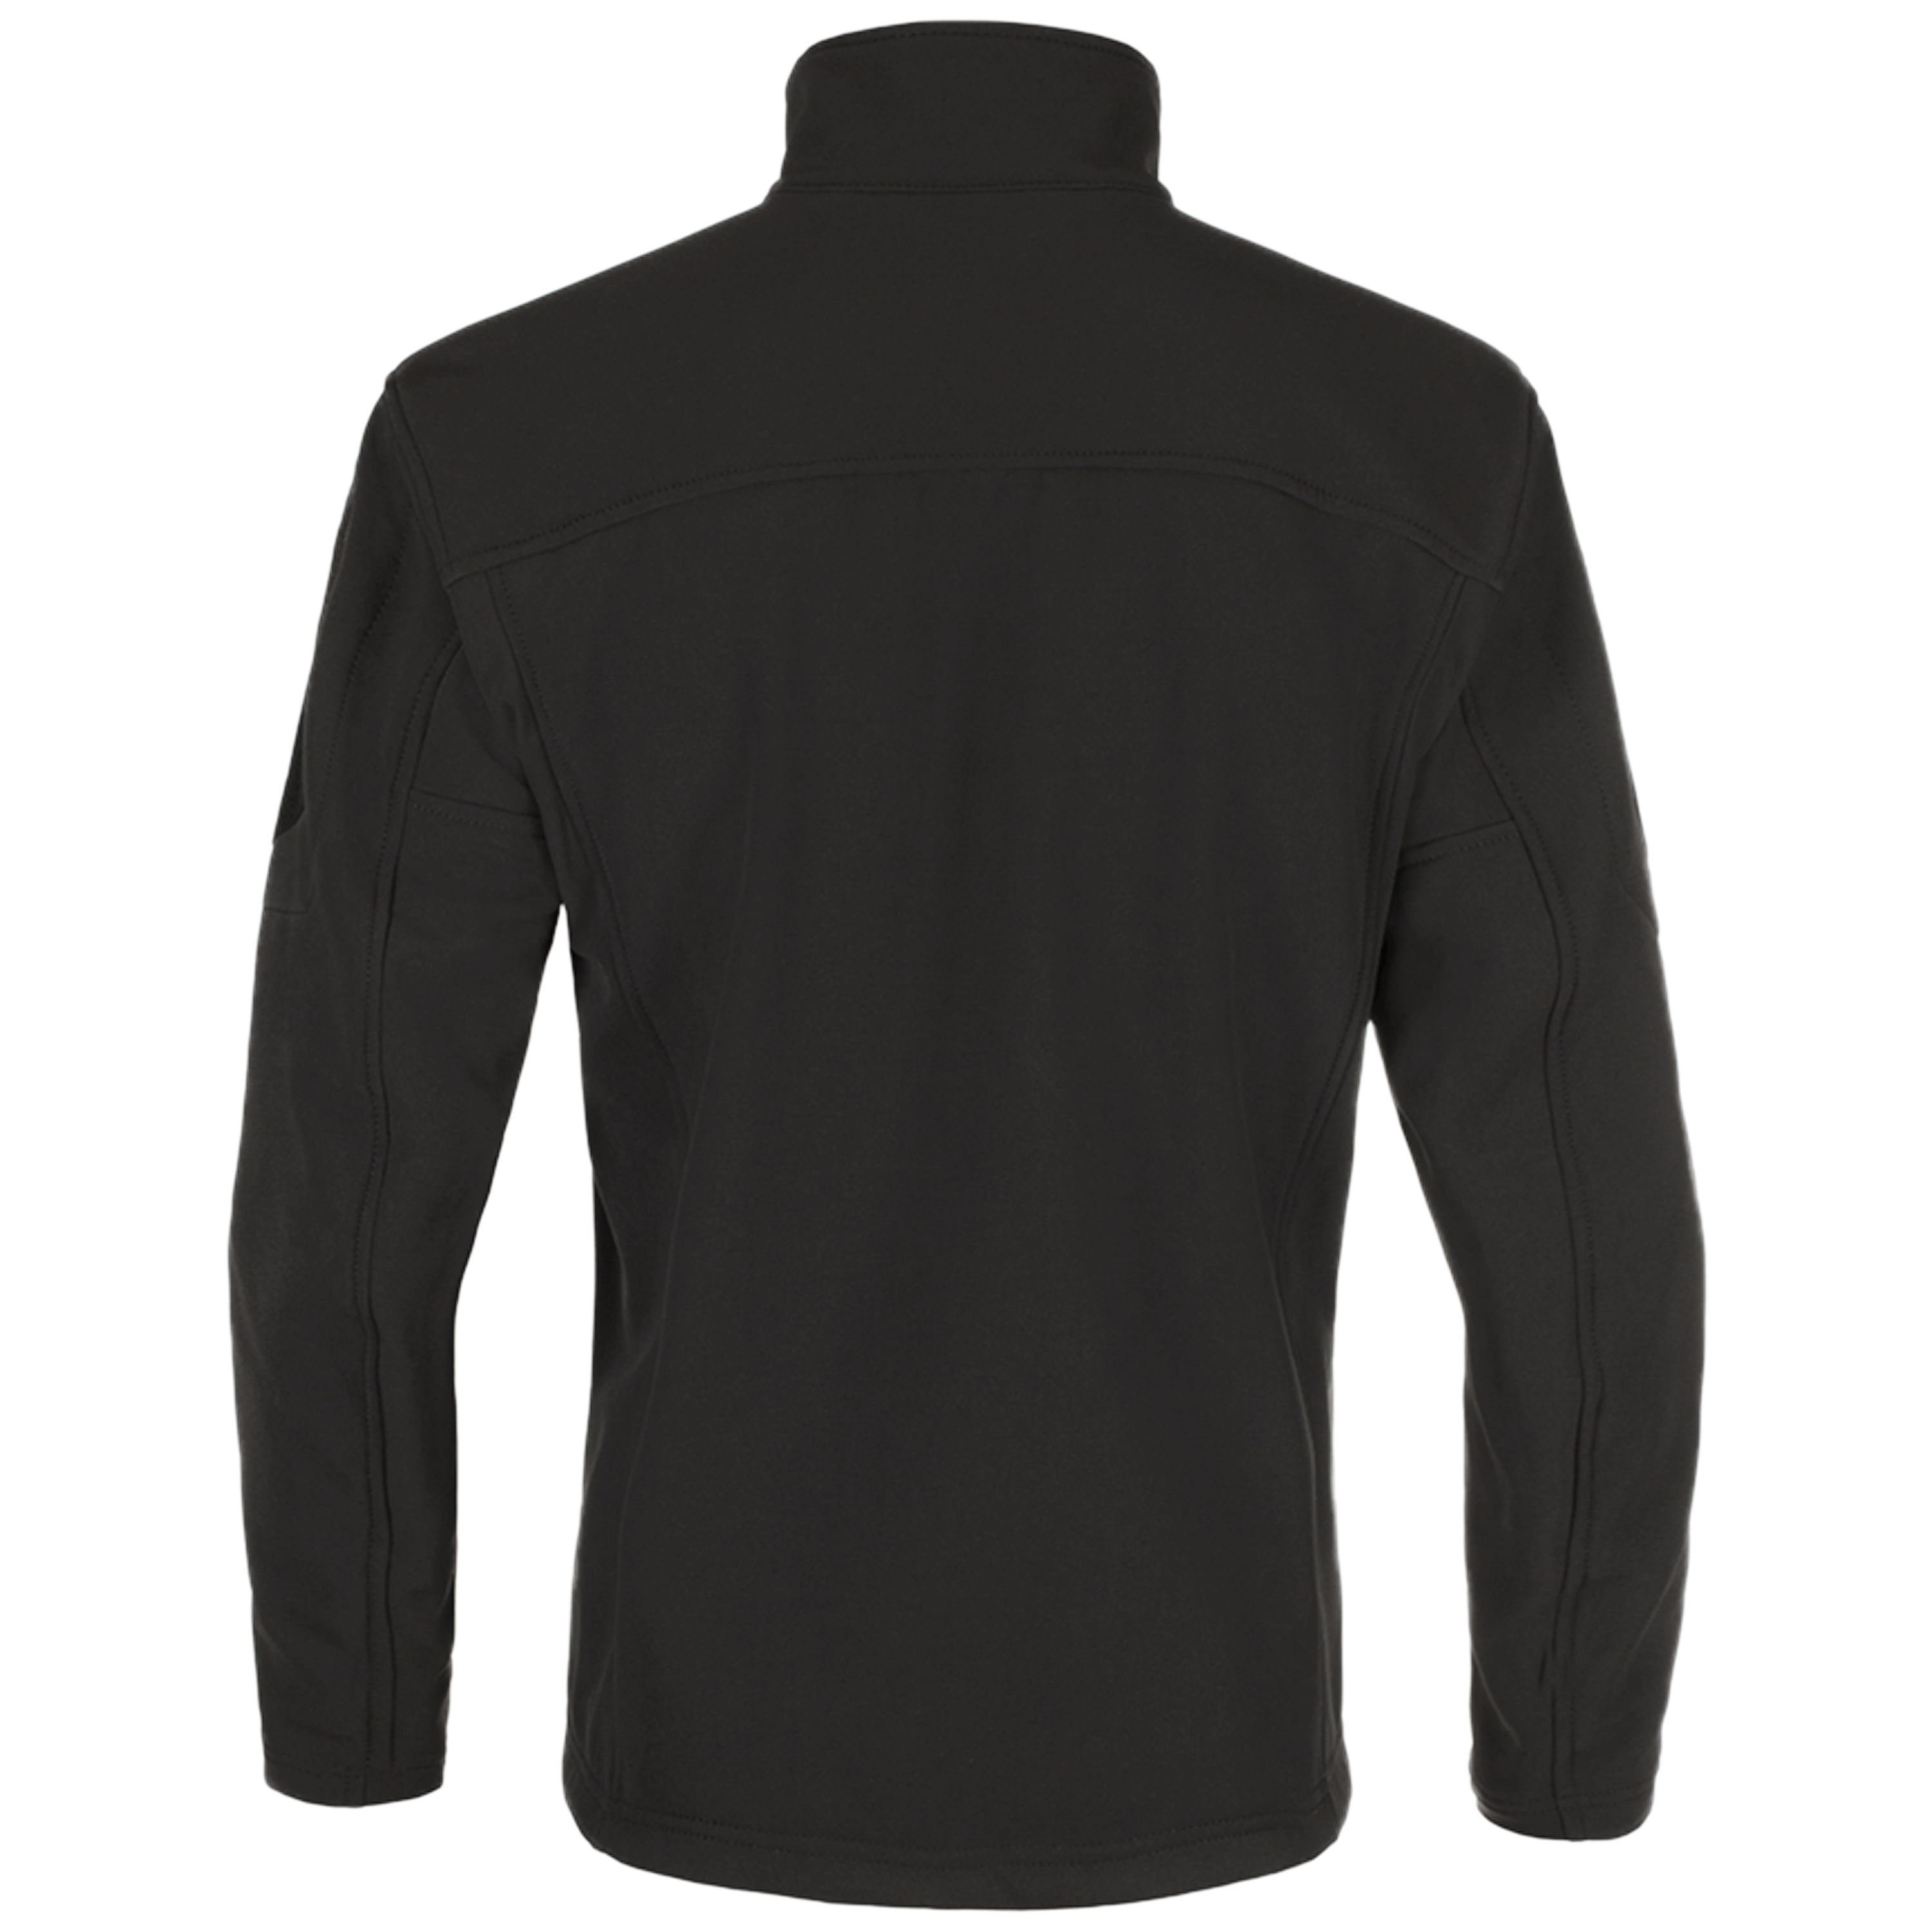 Purchase the Clawgear Jacket Audax Softshell black by ASMC